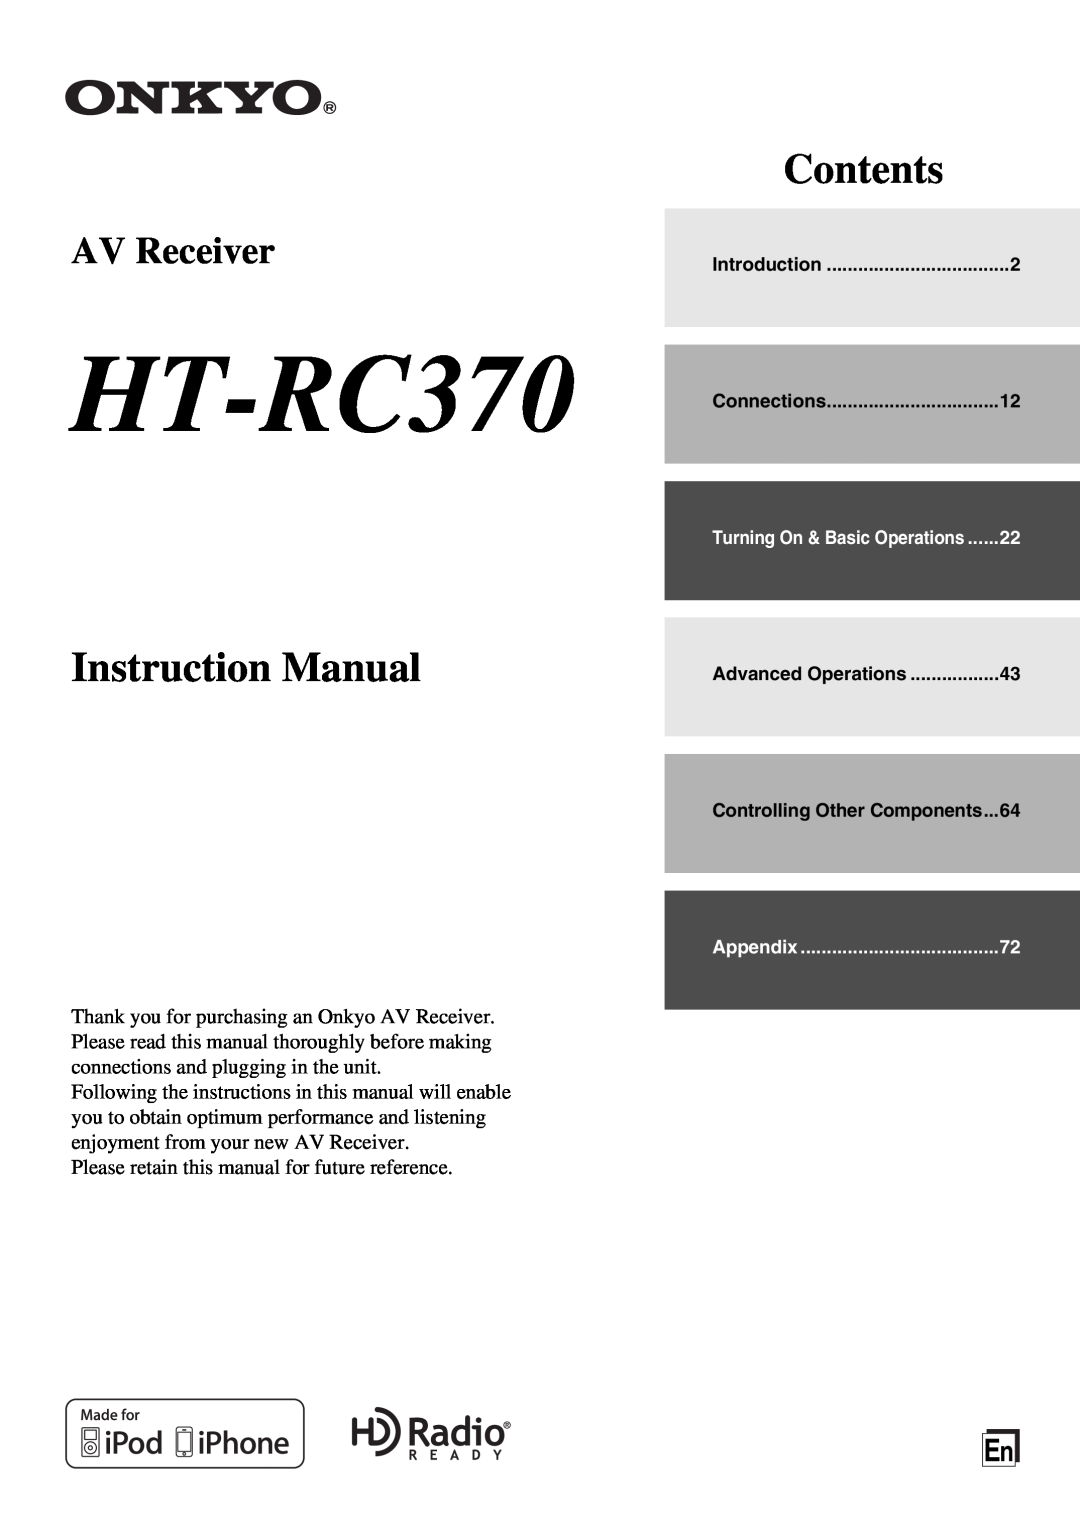 Onkyo manual Quick Setup, Model HT-RC370 